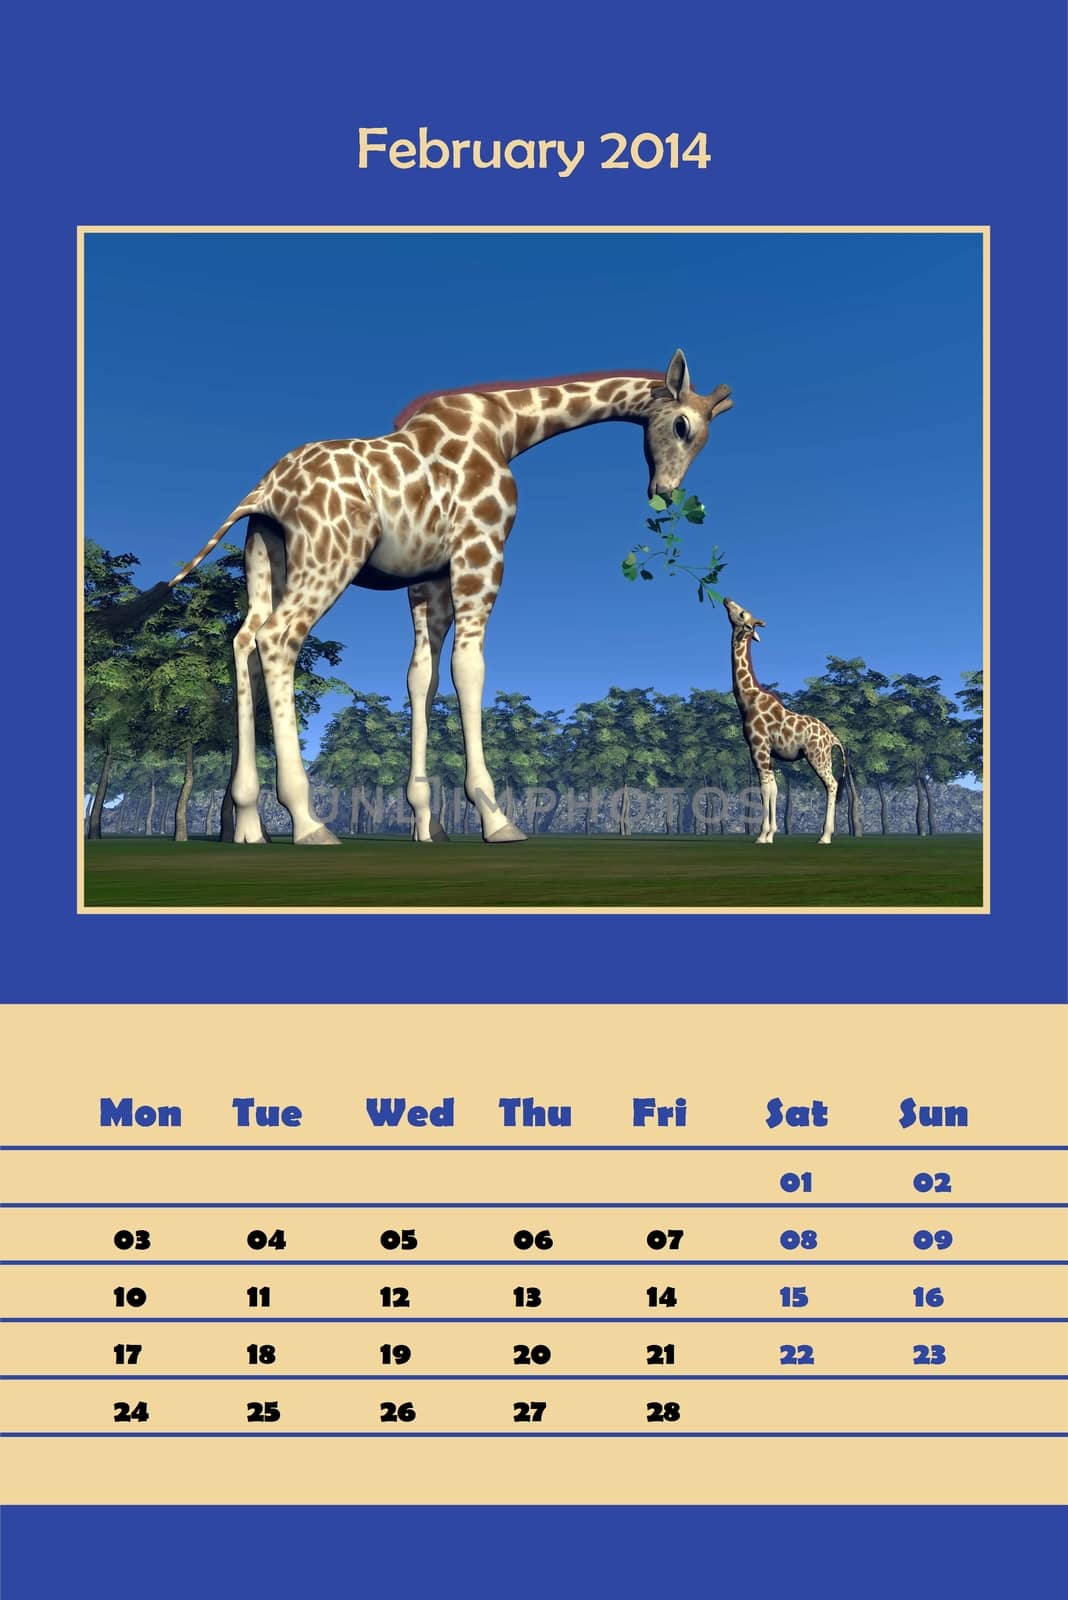 Colorful english calendar for february 2014 in black background - giraffe mum feeding little one, 3D render